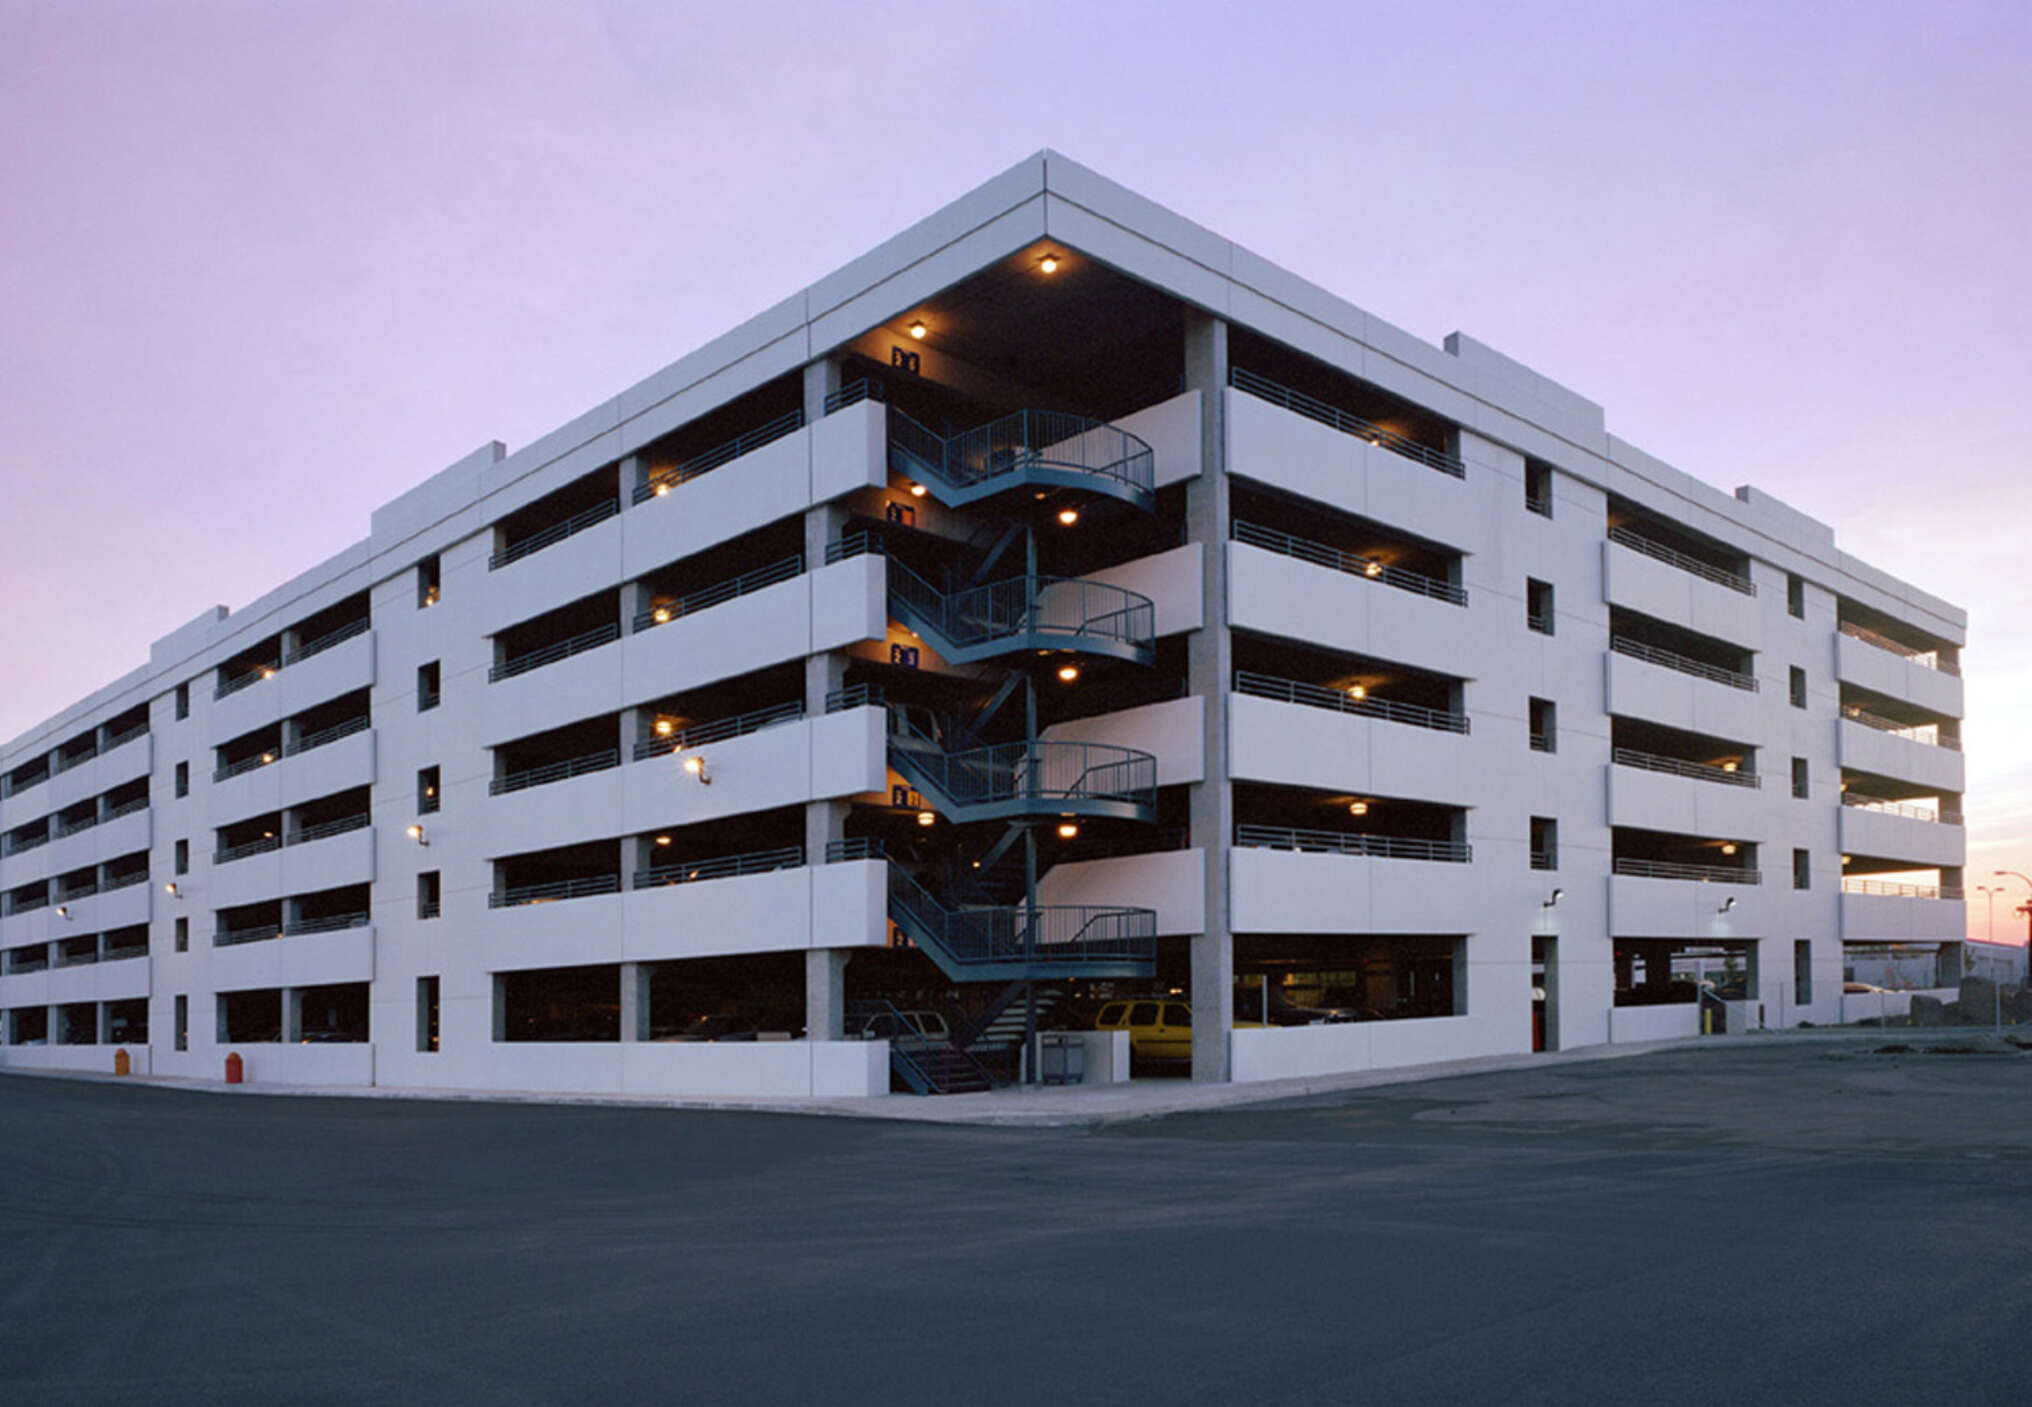 Spokane Airport Parking Garage Addition For Vault